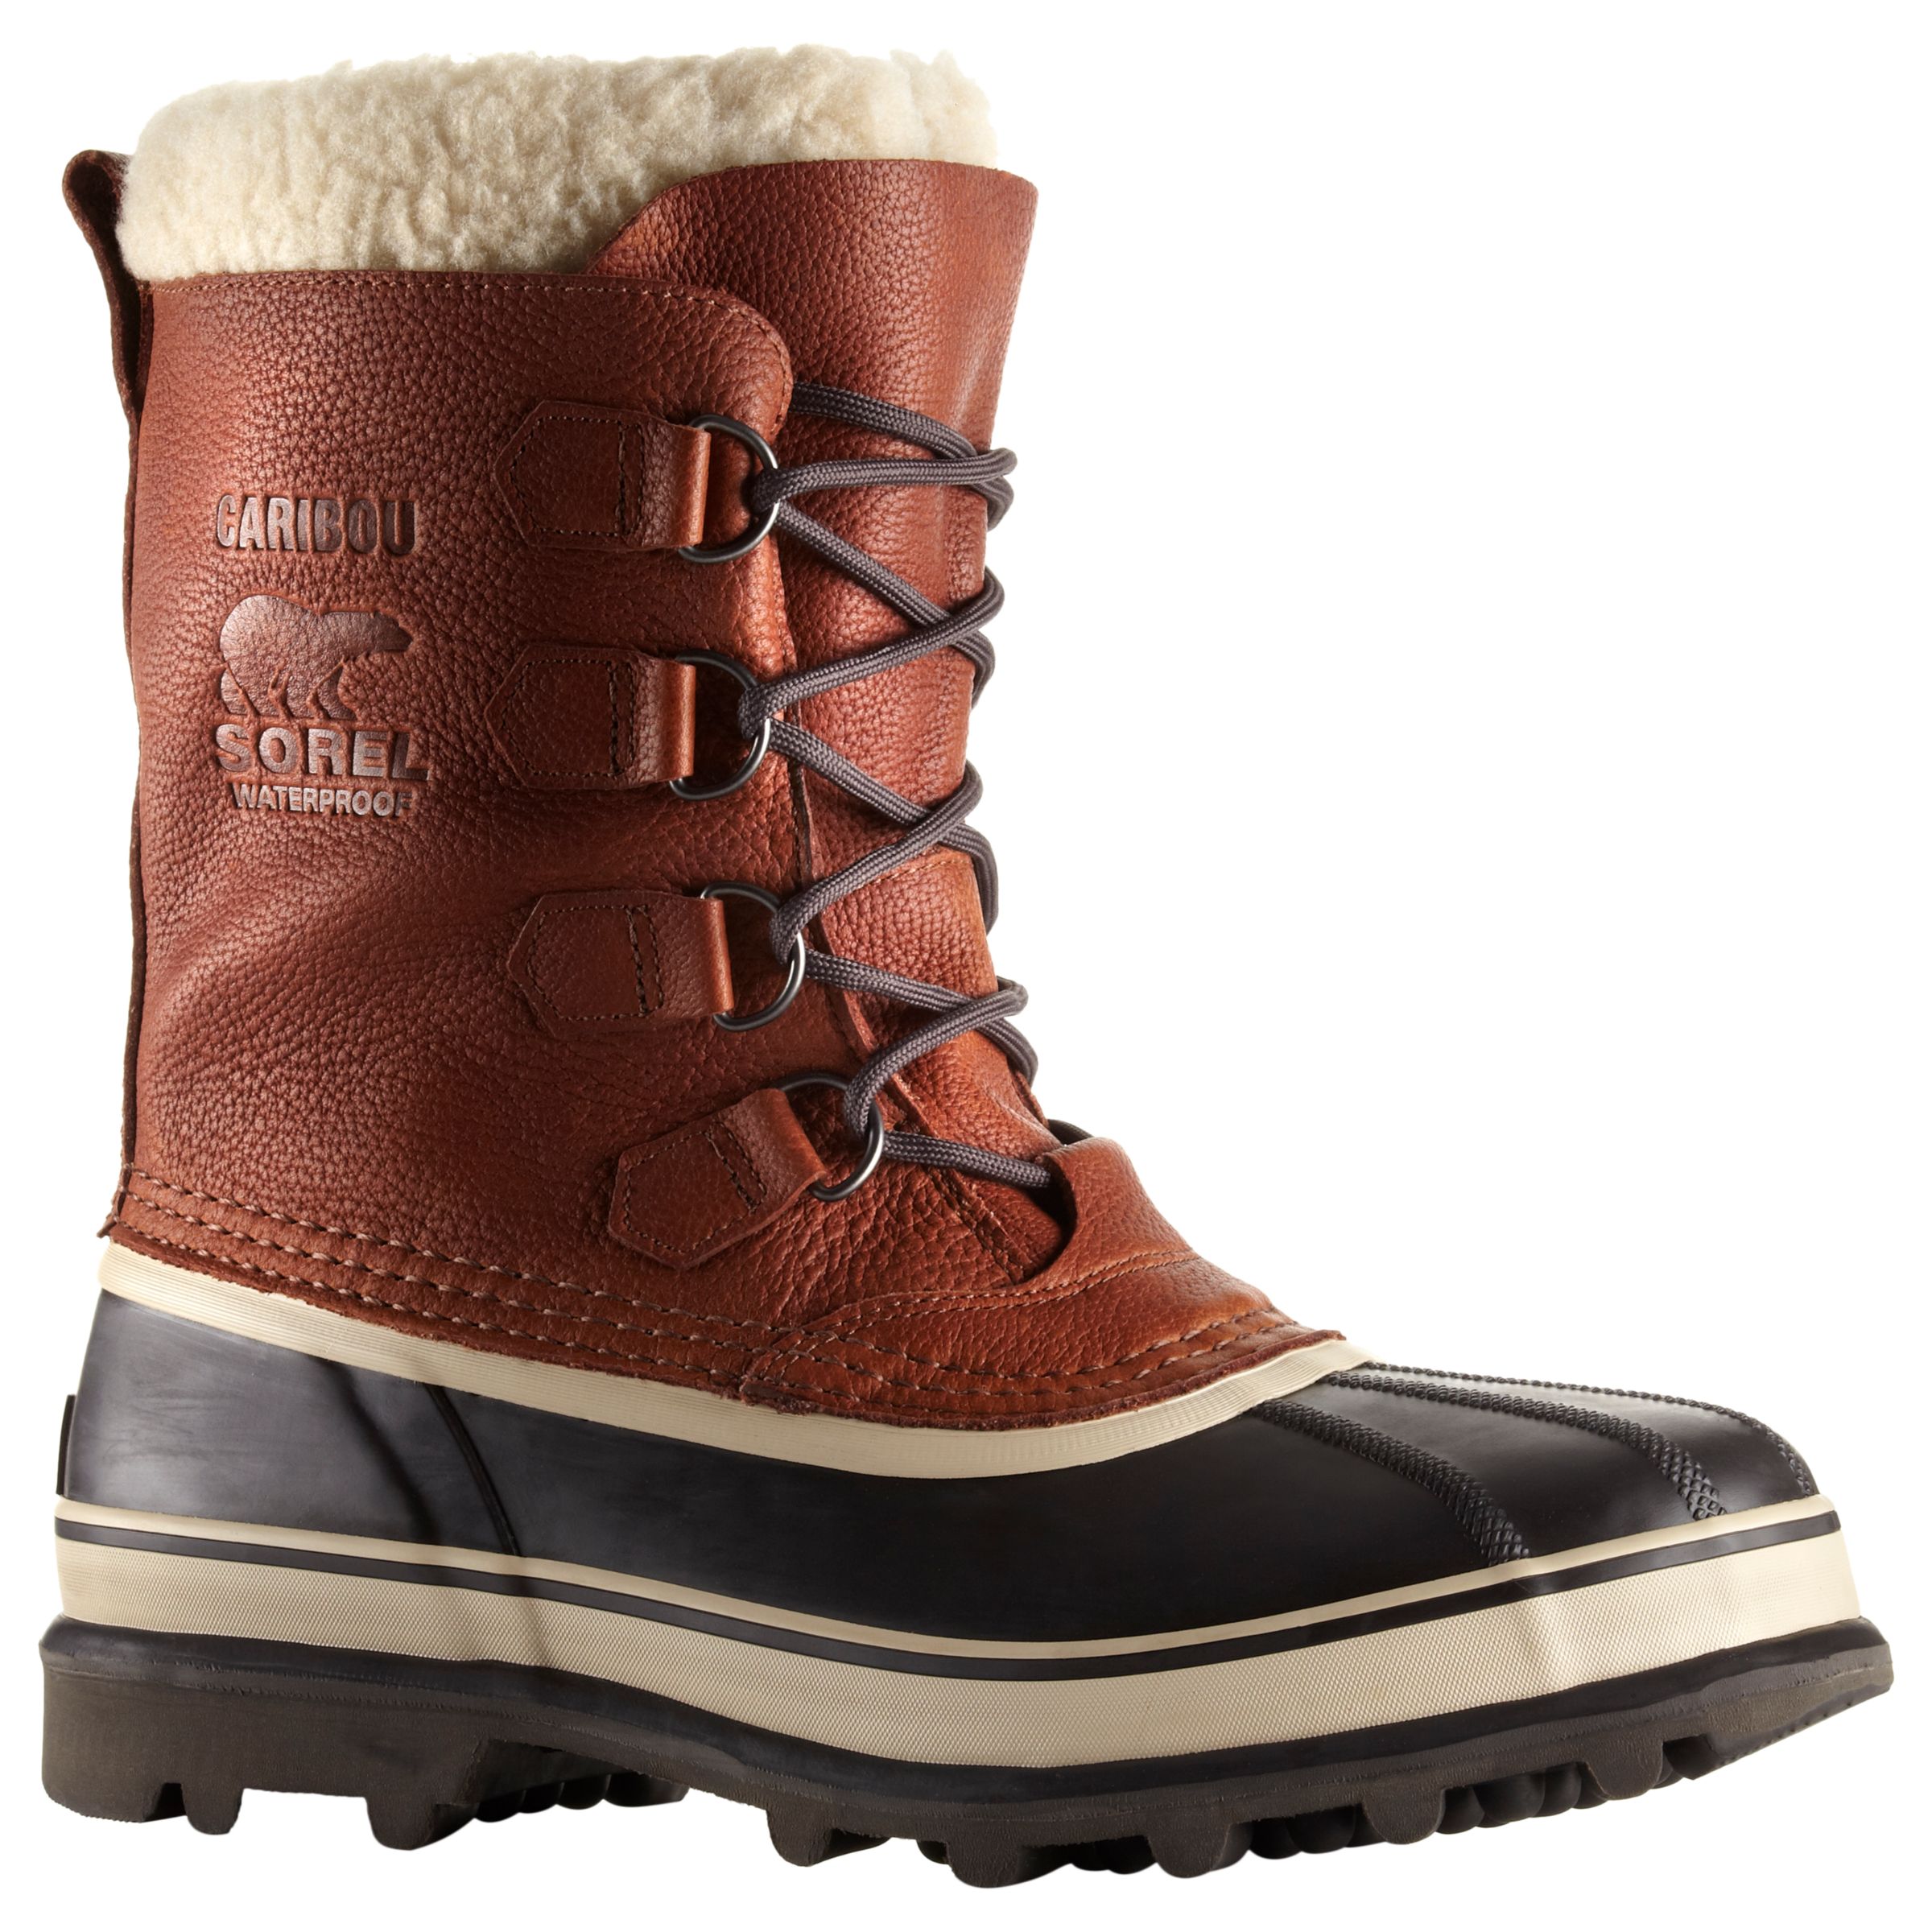 Sorel Caribou Men's Winter Snow Boots, Brown at John Lewis & Partners